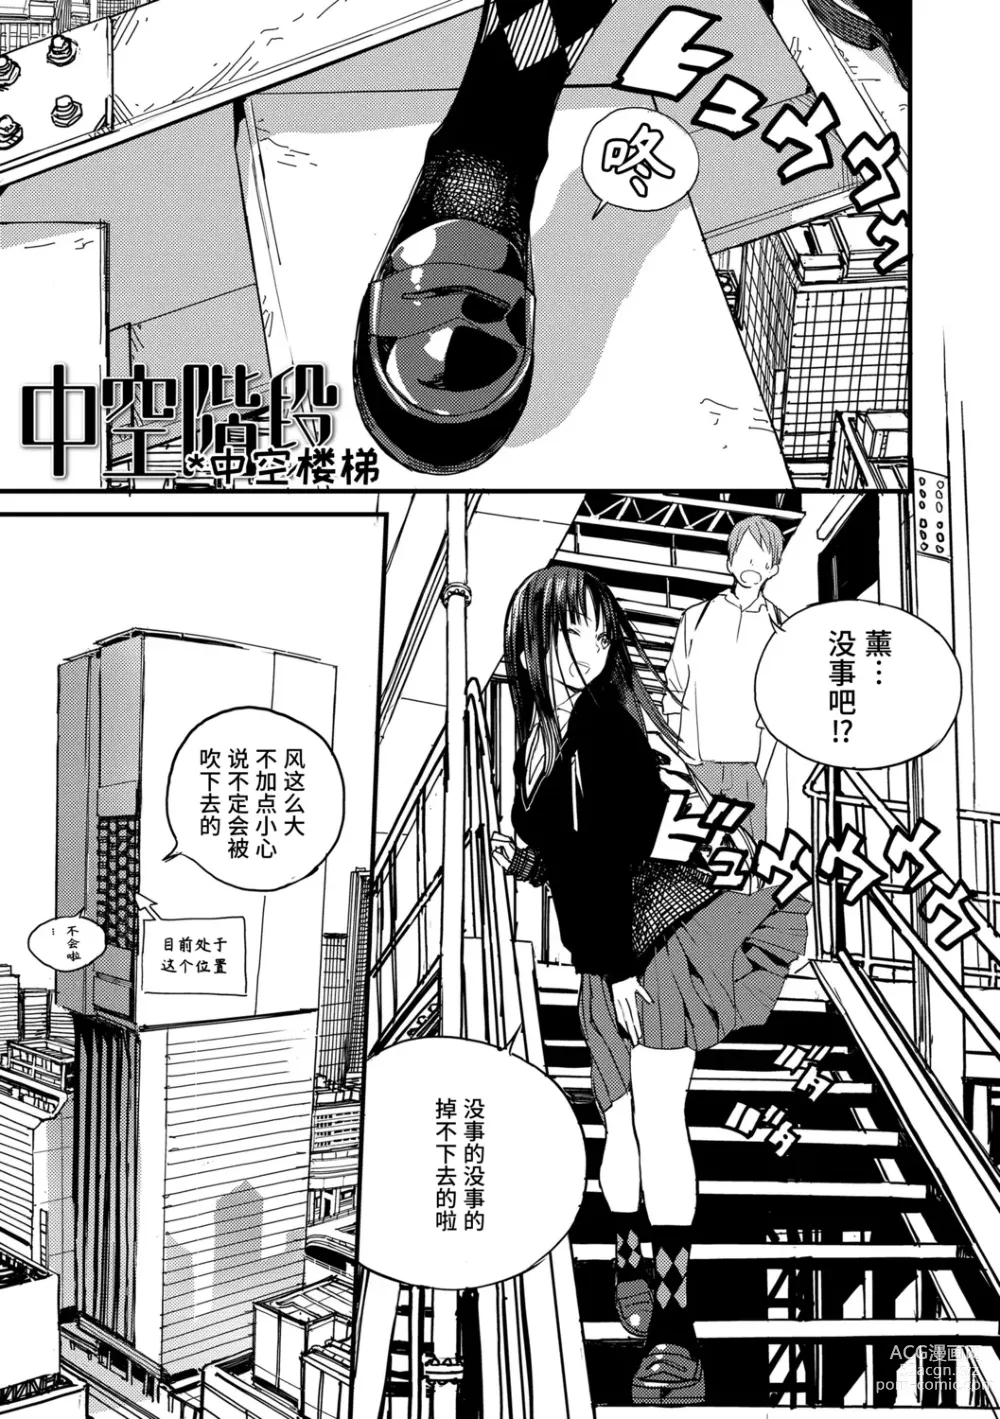 Page 1 of doujinshi 中空楼梯